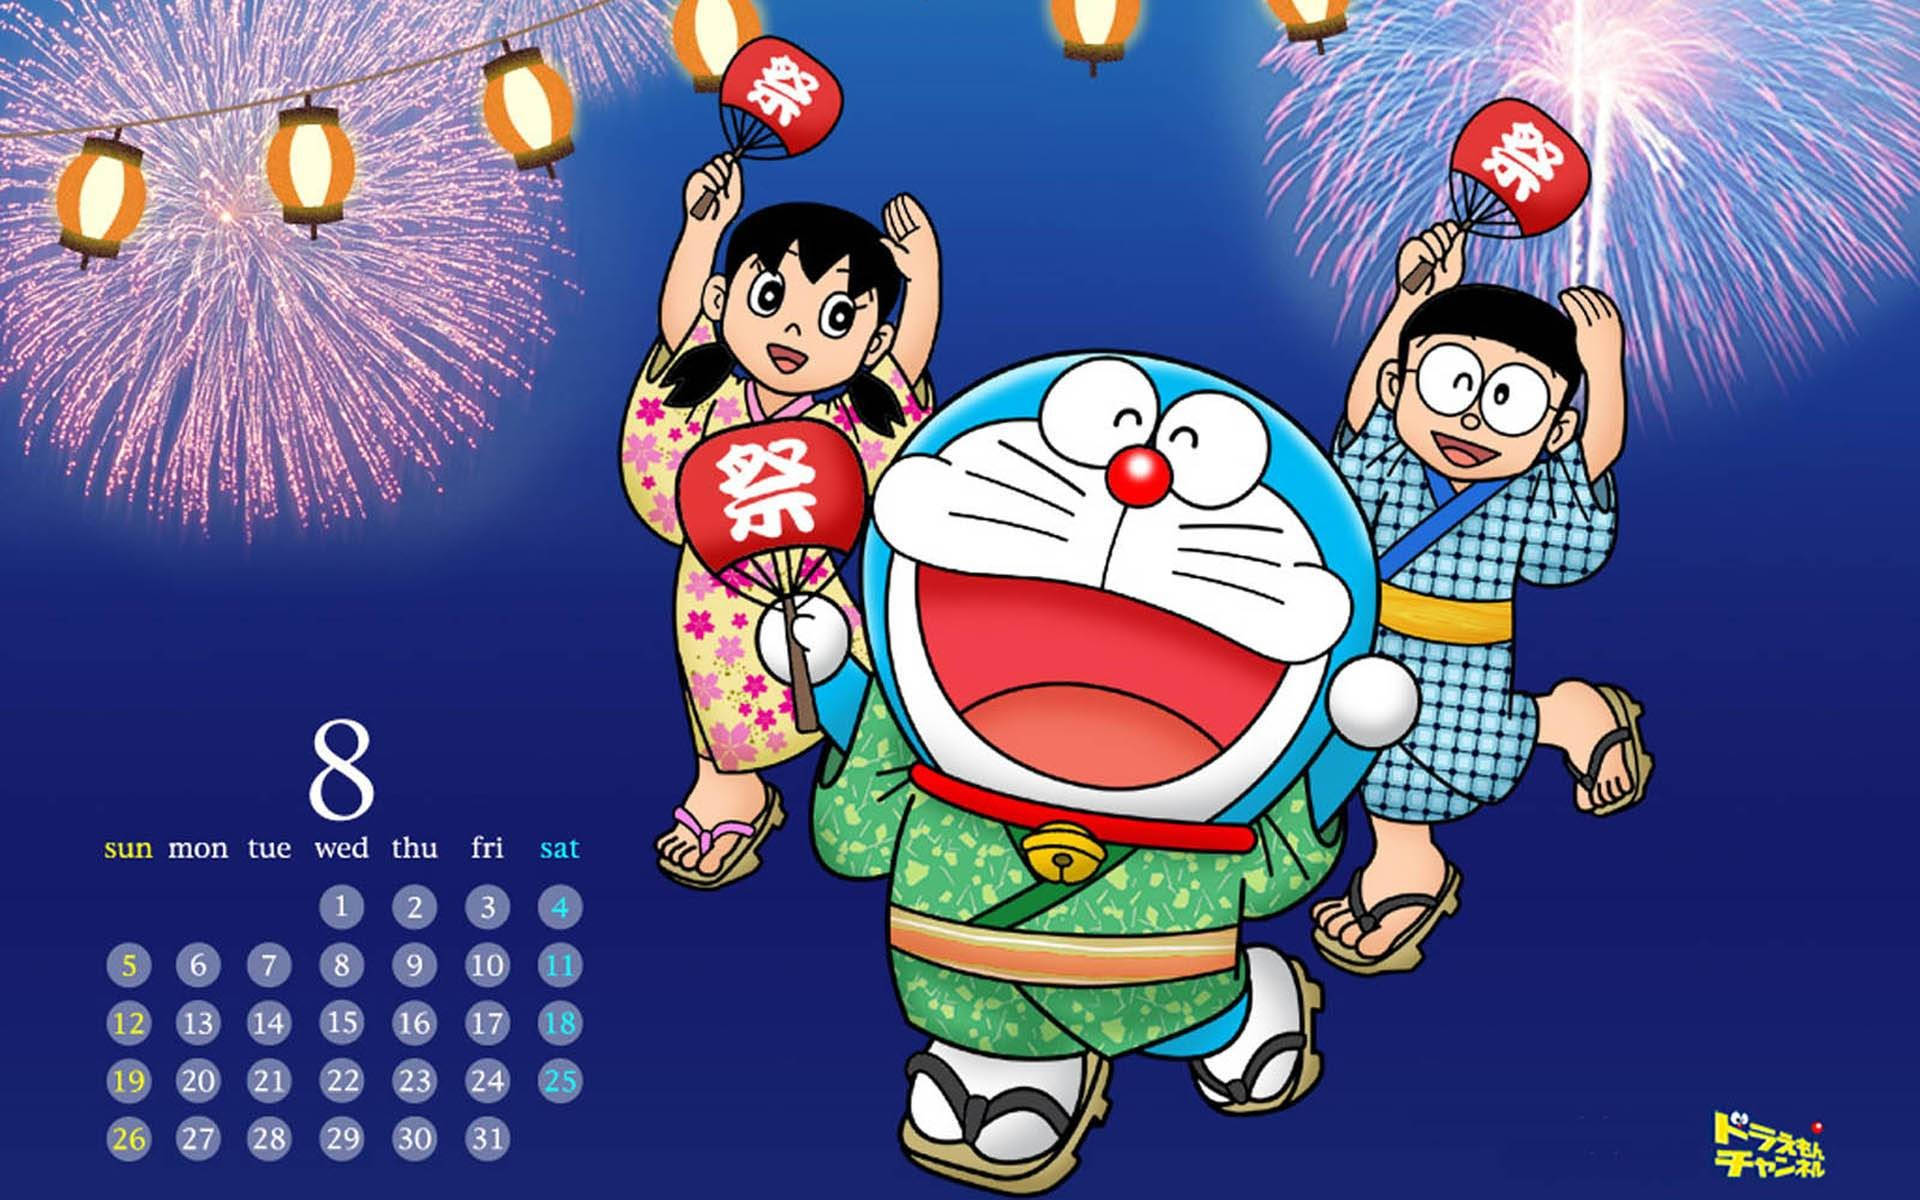 Doraemon In Calendar Background